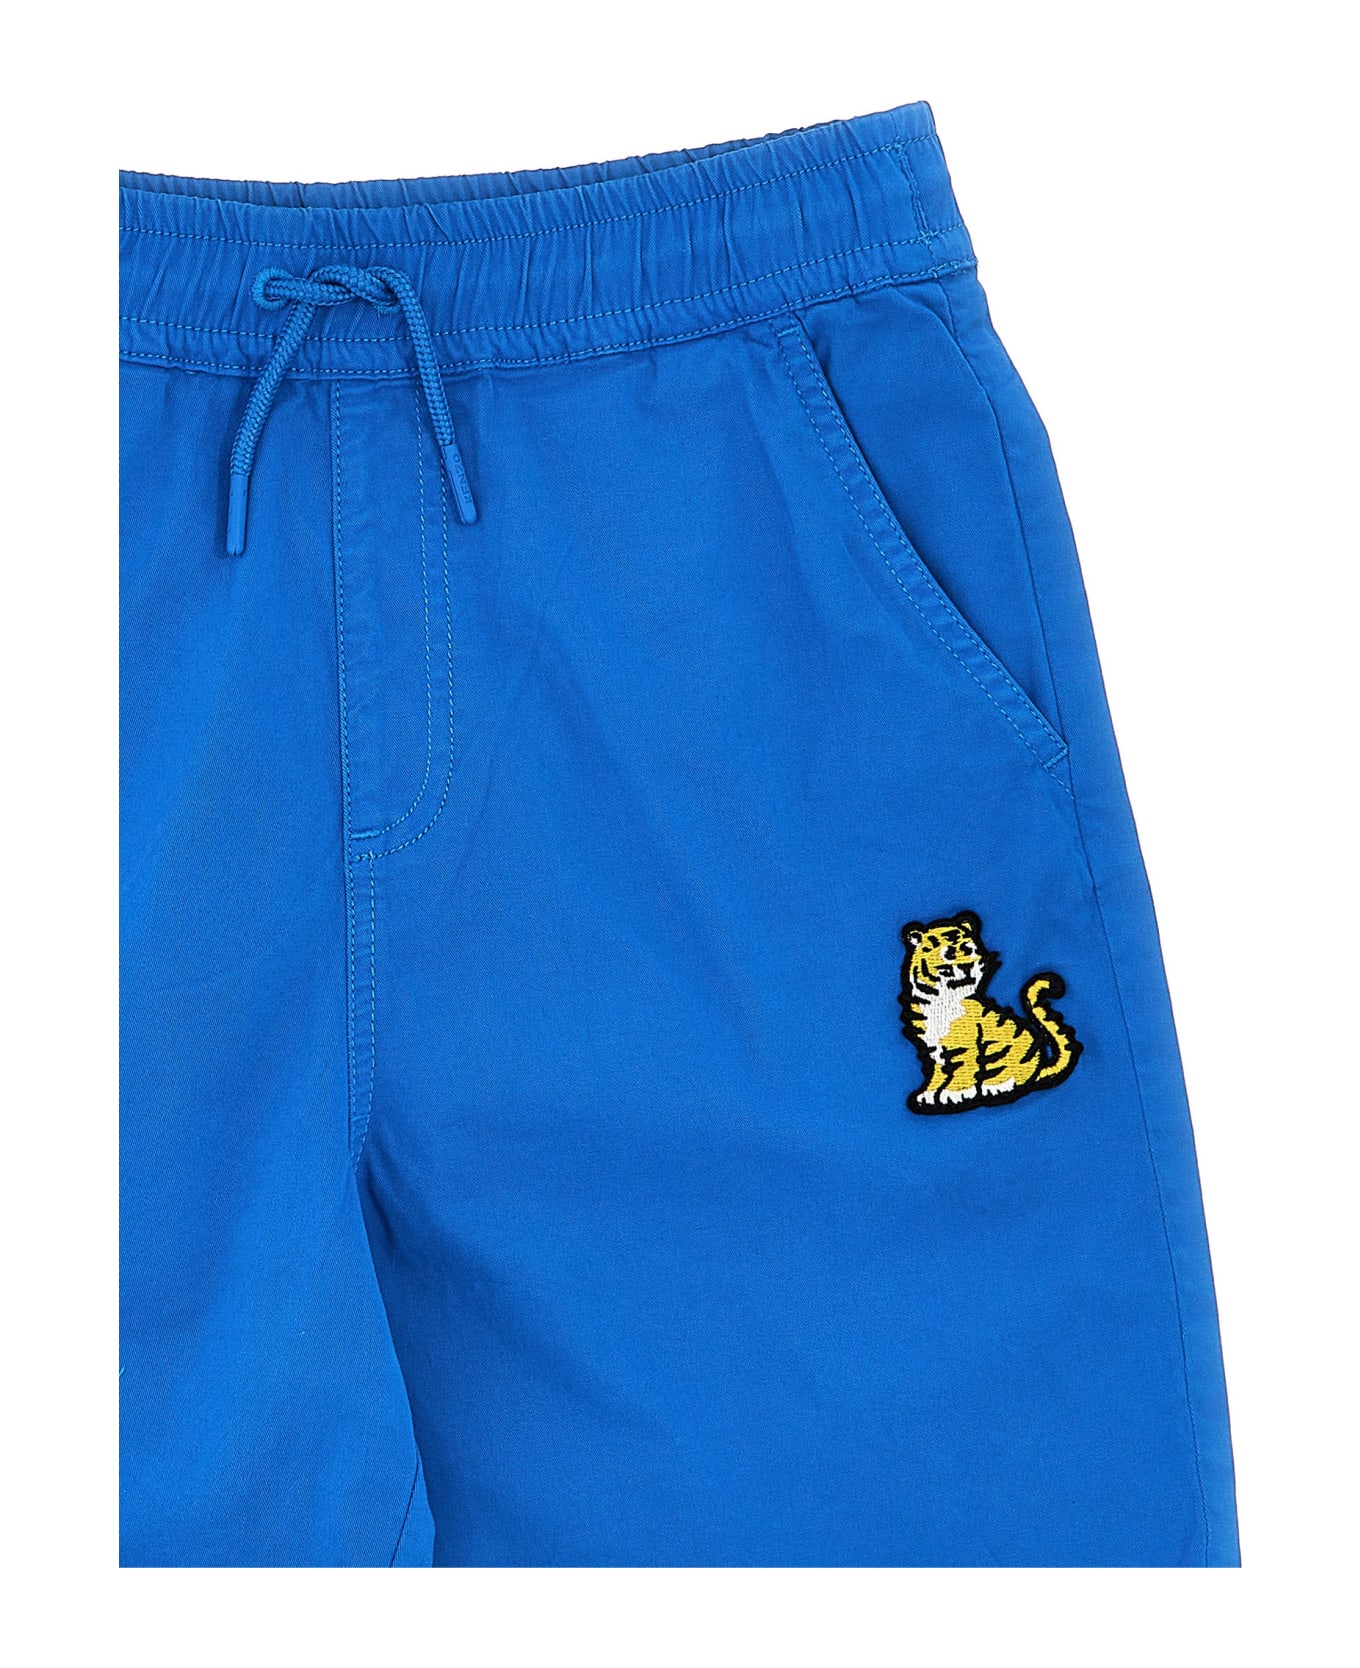 Kenzo Kids Patch Bermuda Shorts - Blue